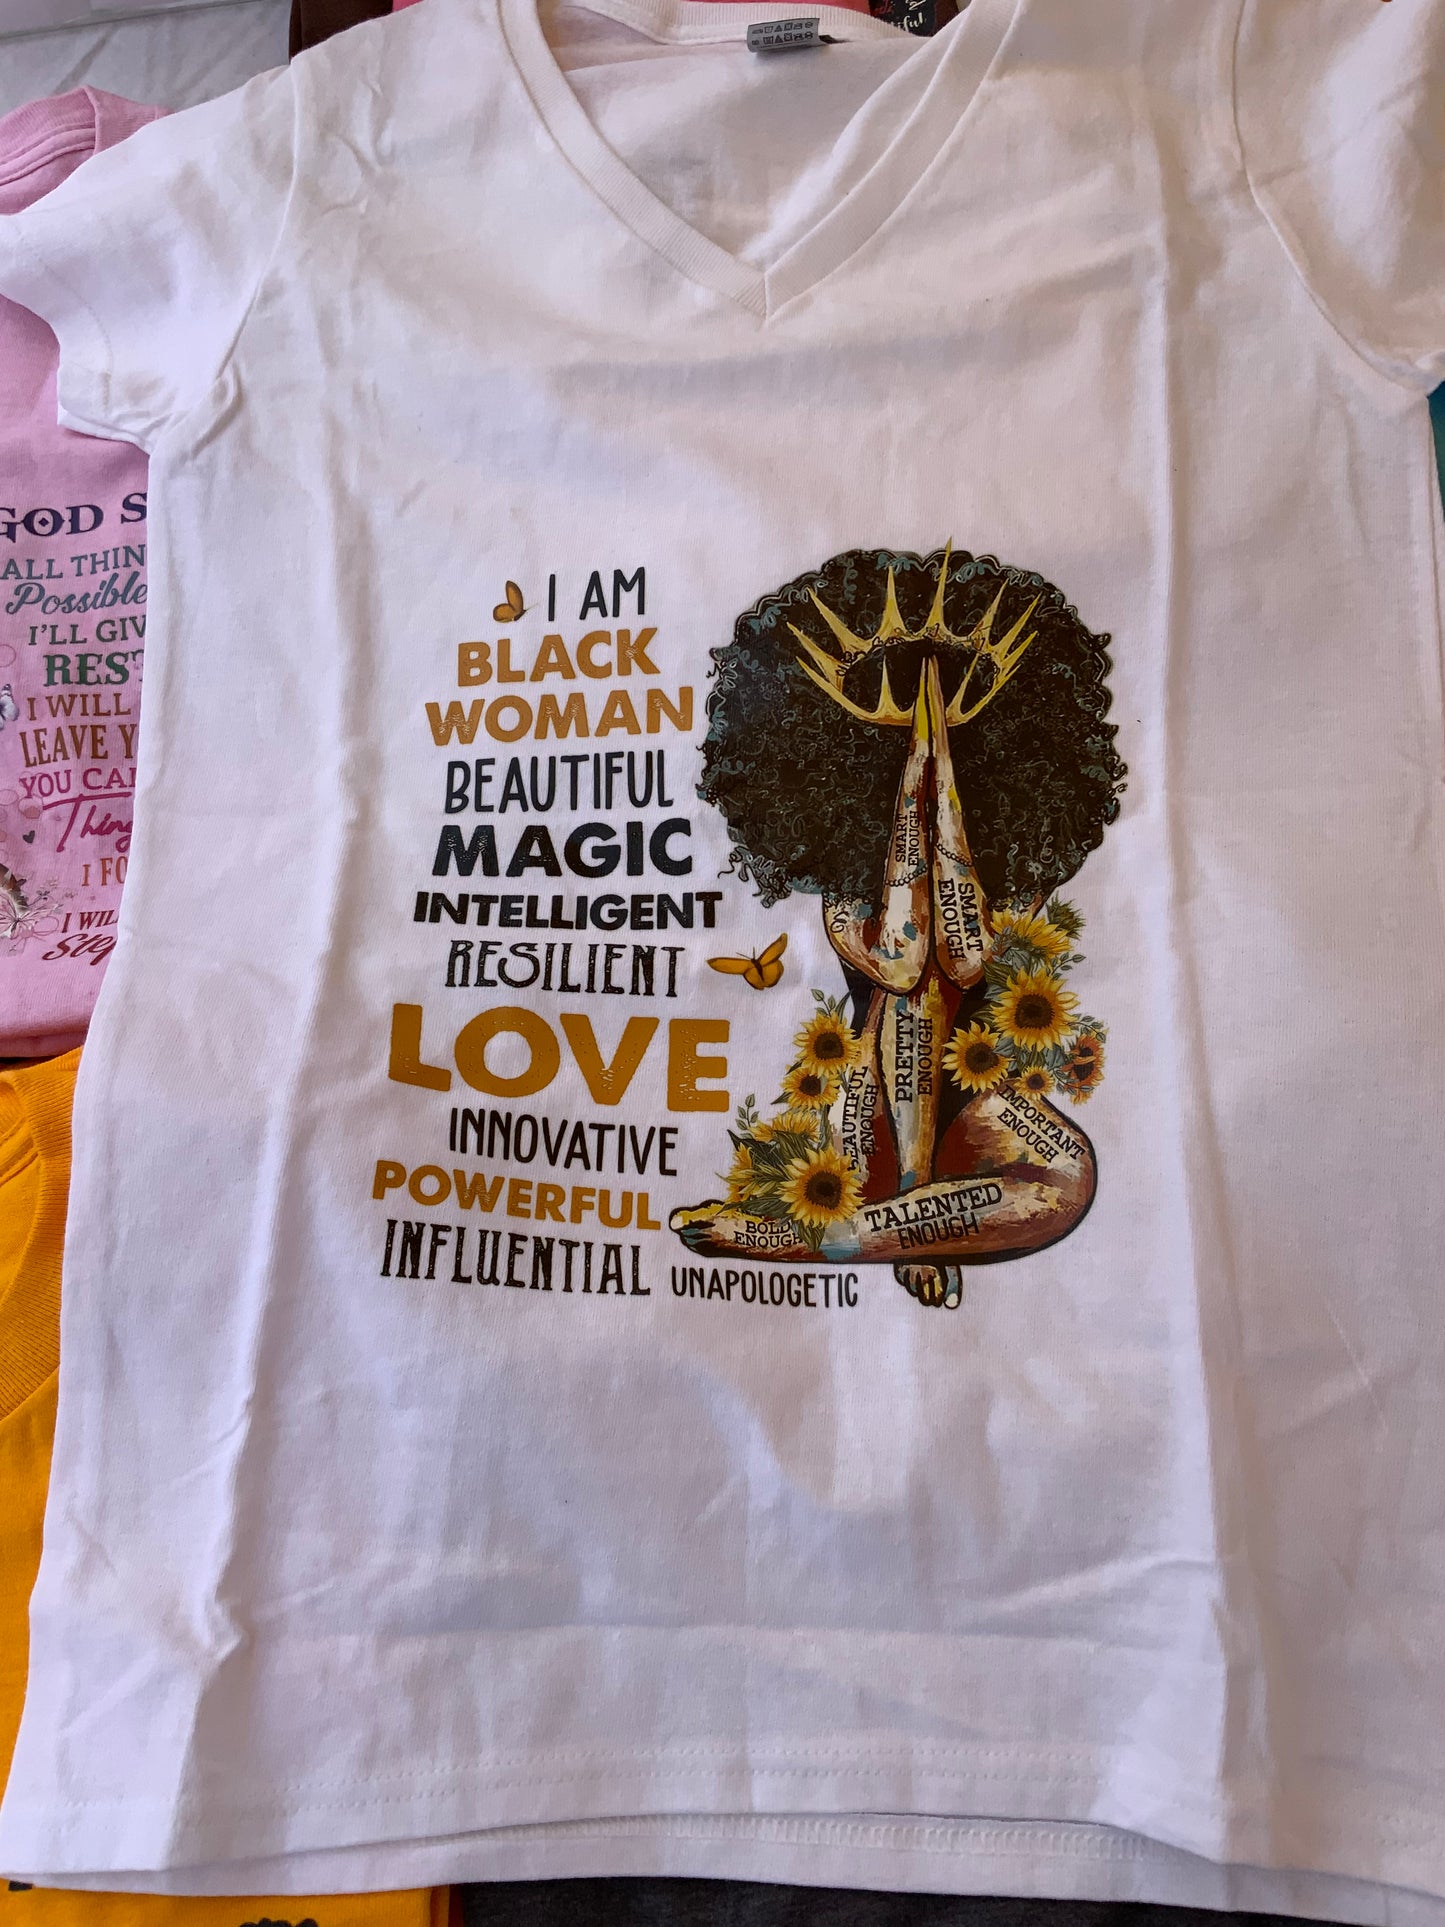 I am black woman cotton t shirt